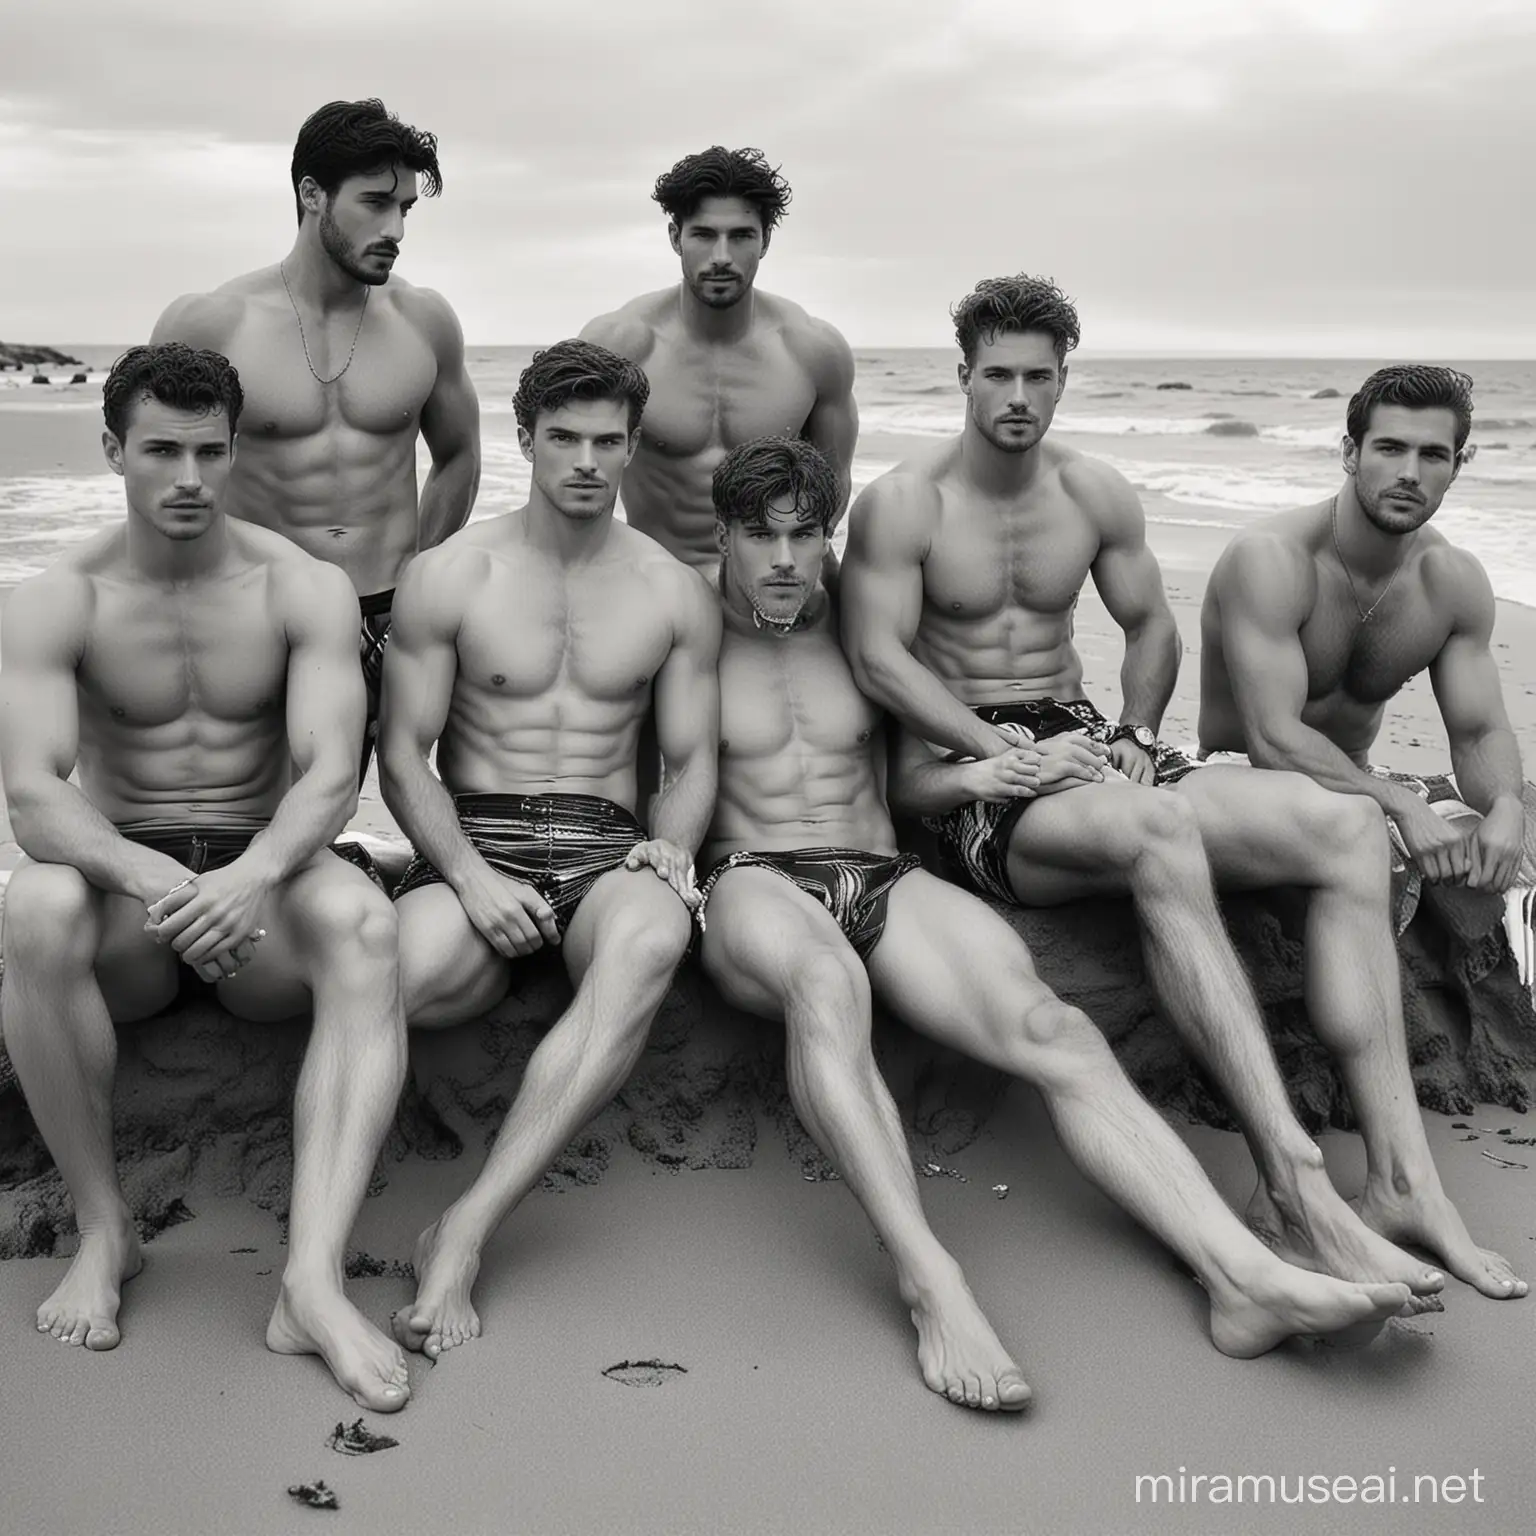 Muscular Men Relaxing on Sandy Beach Capturing Bruce Weber Style in Monochrome